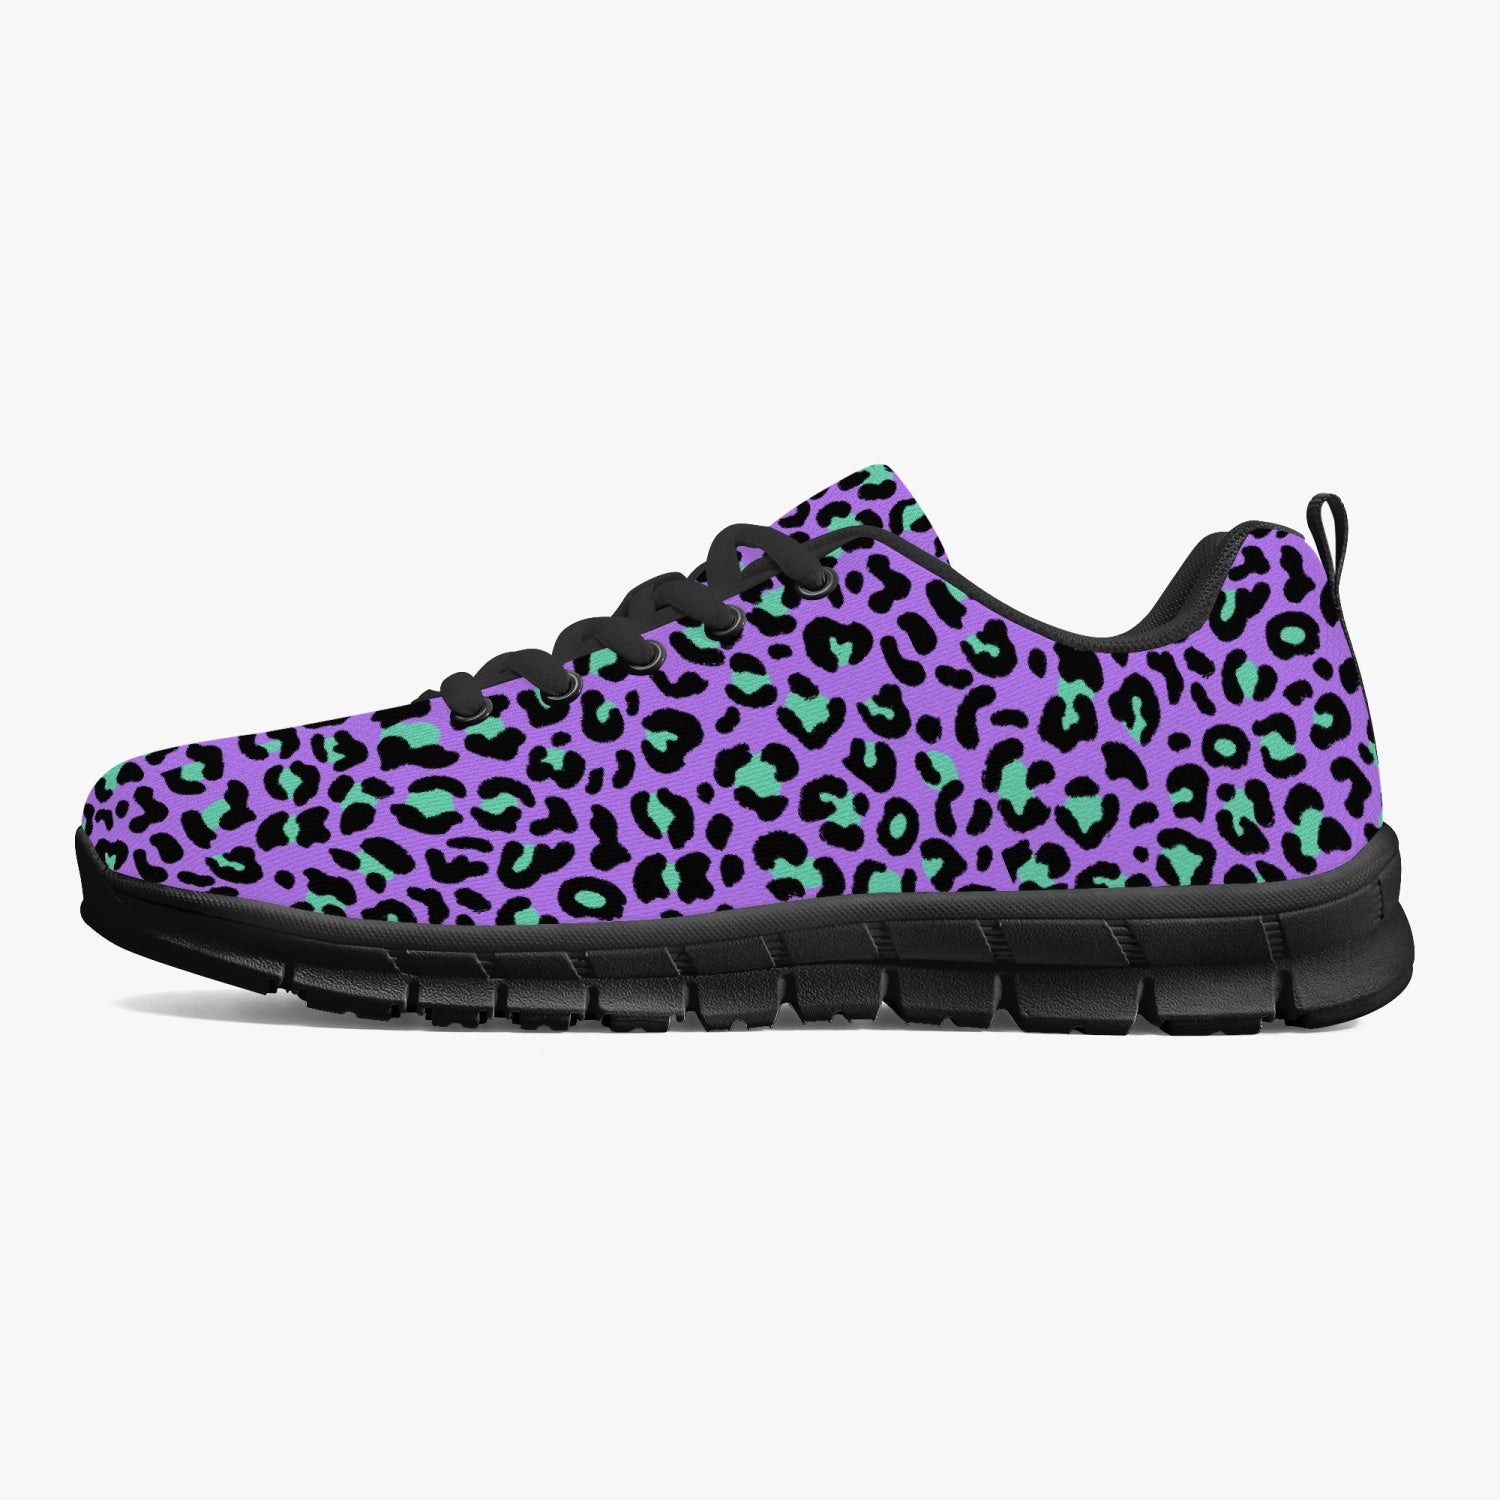 Women's Purple Wild Leopard Cheetah Print Half Print Gym Workout Running Sneakers Left Shoe